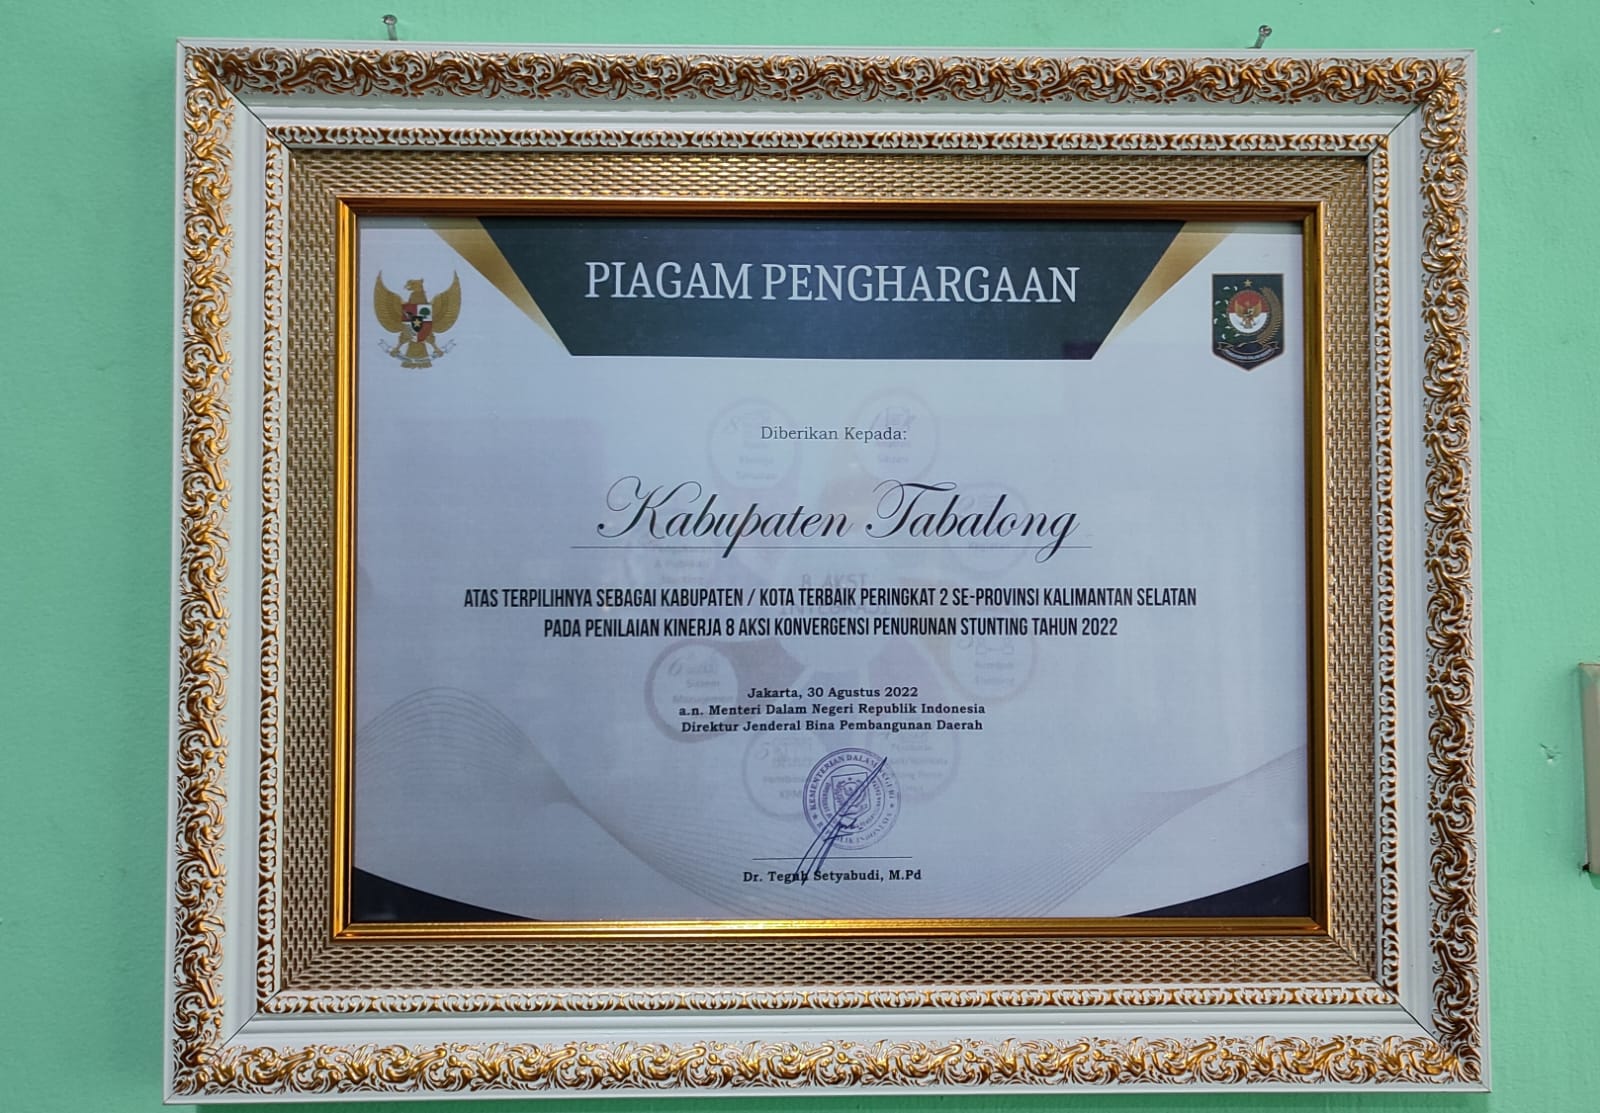 Piagam penghargaan di terima Kabupaten Tabalong sebagai terbaik peringkat 2 penurunan stunting tahun 2022 dari Mendagri RI. (Foto: Arif/Koranbanjar.net)